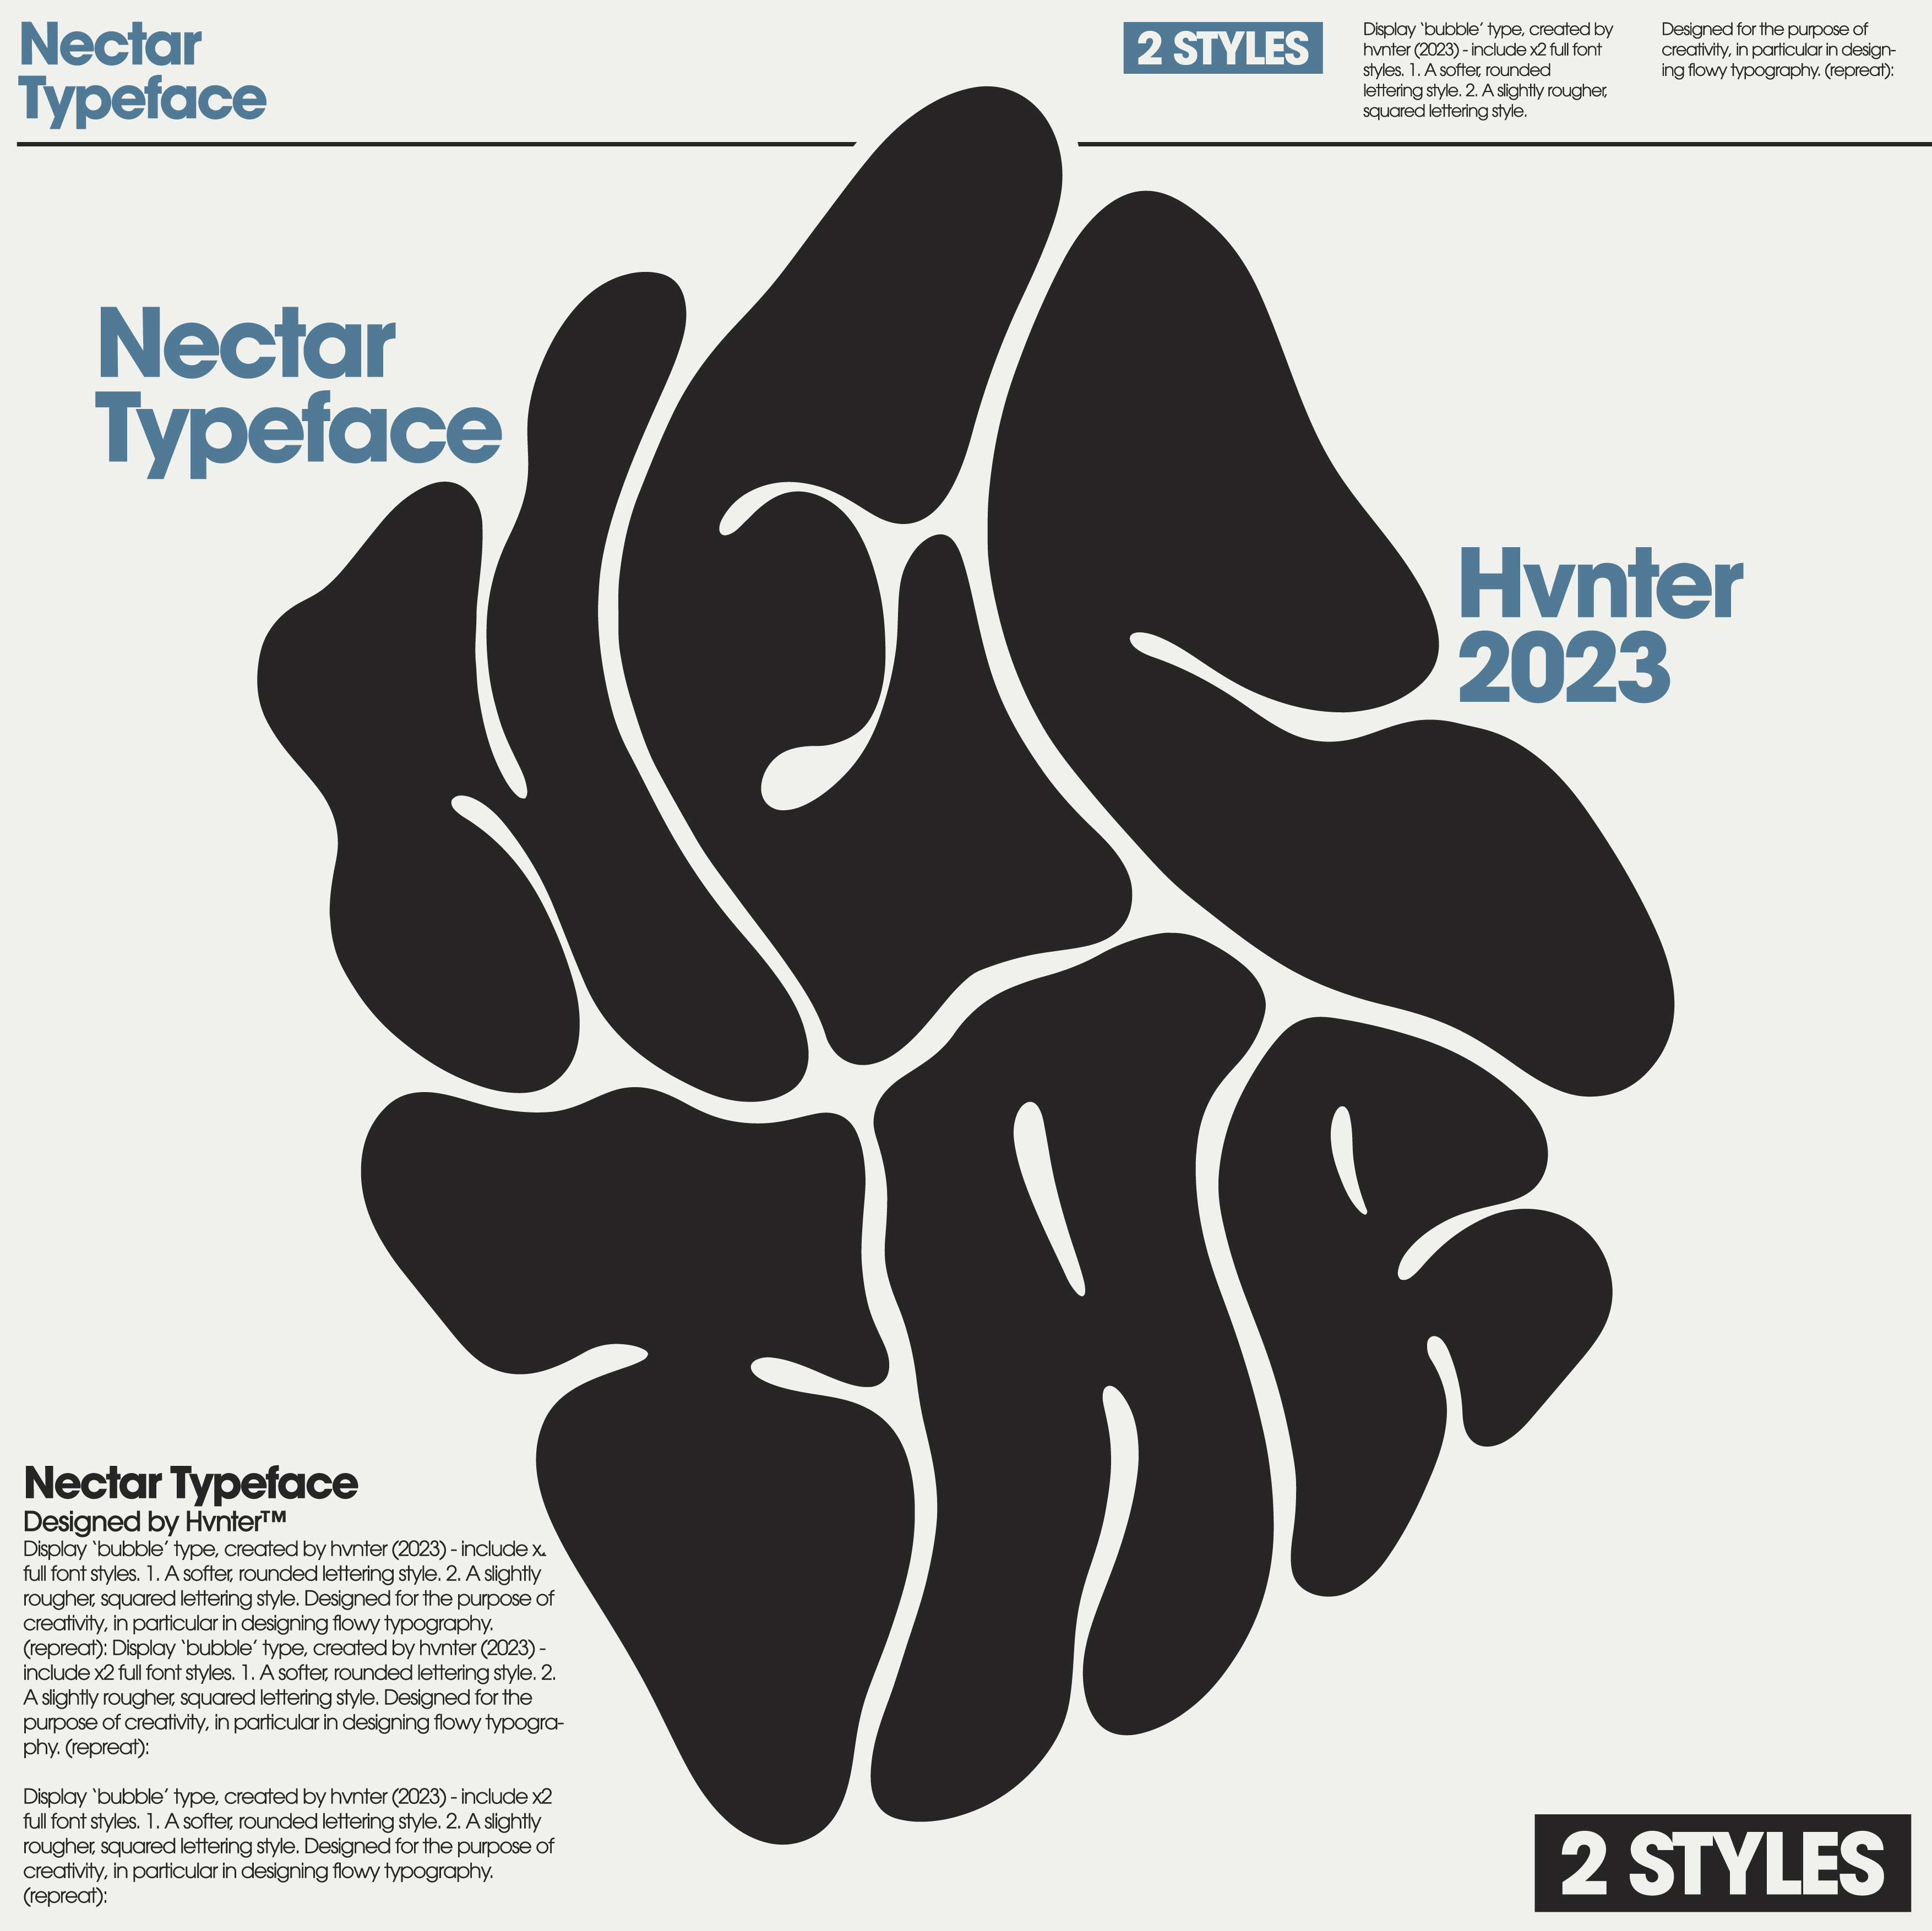 Nectar Typeface